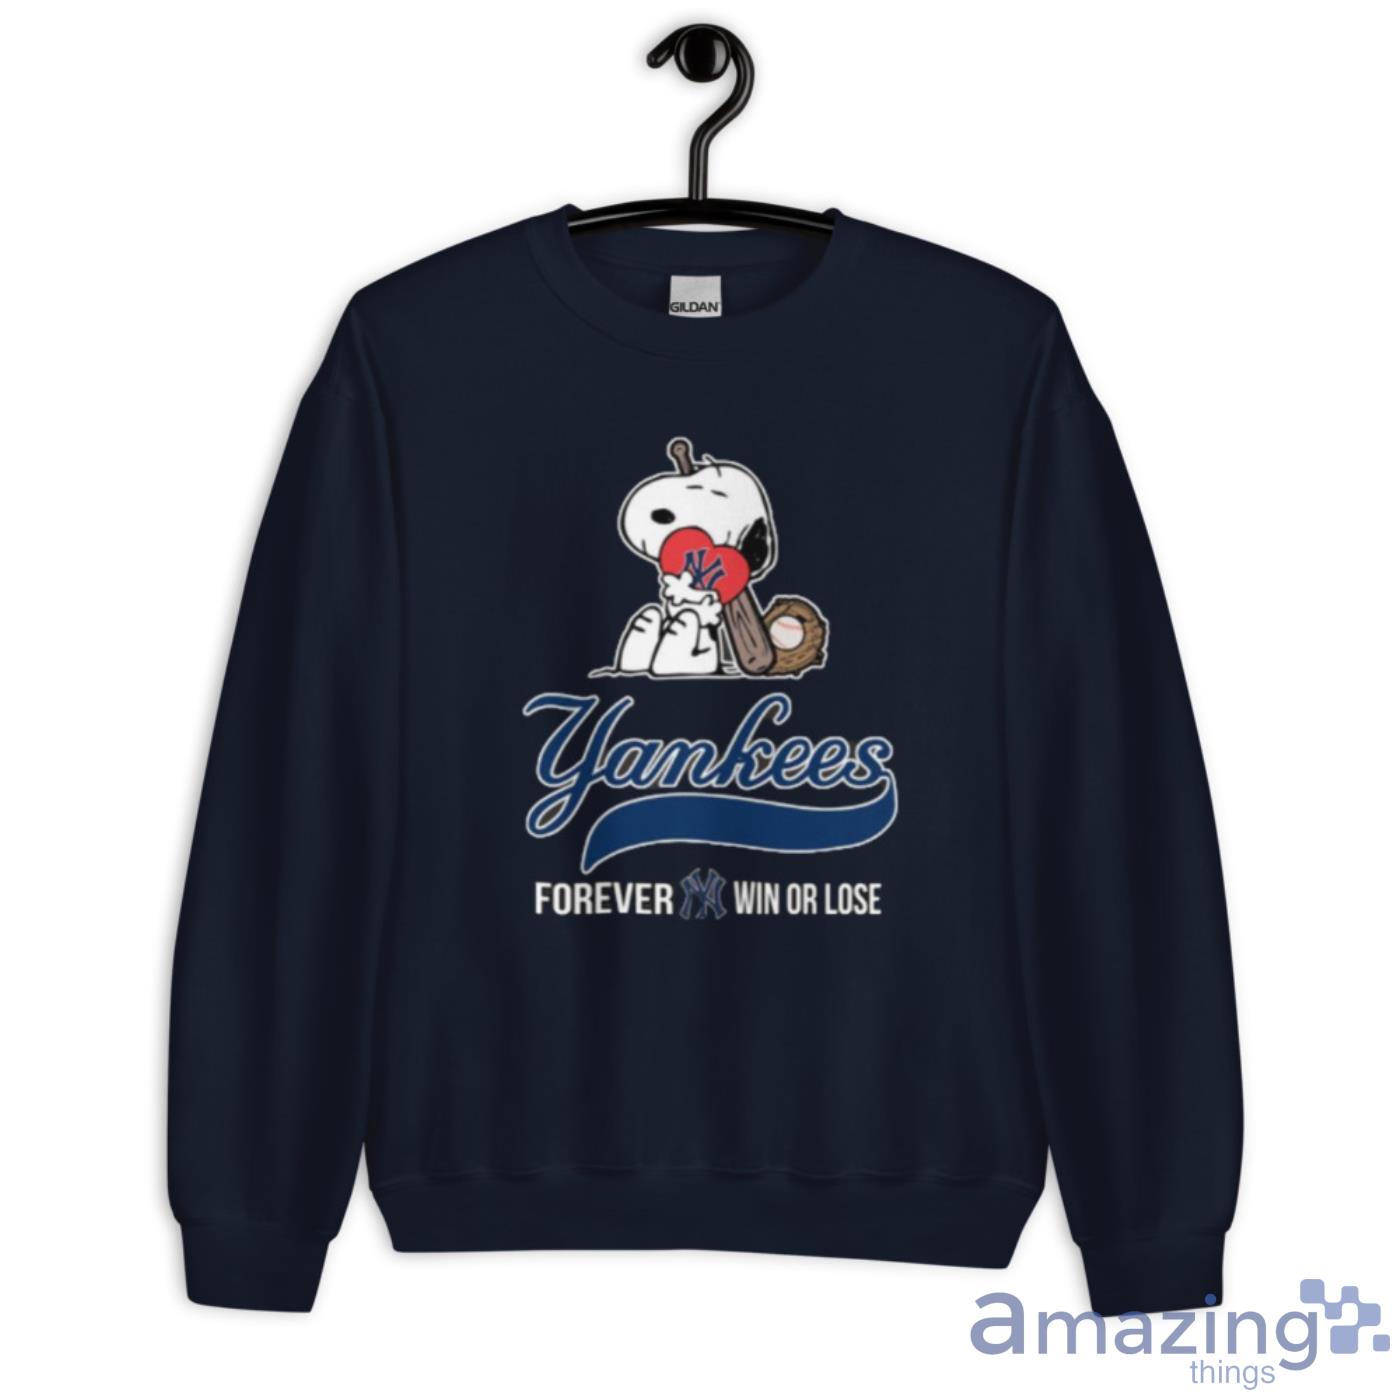 MLB New York Yankees Snoopy Charlie Brown Woodstock The Peanuts Movie  Baseball T Shirt_000 T-Shirt